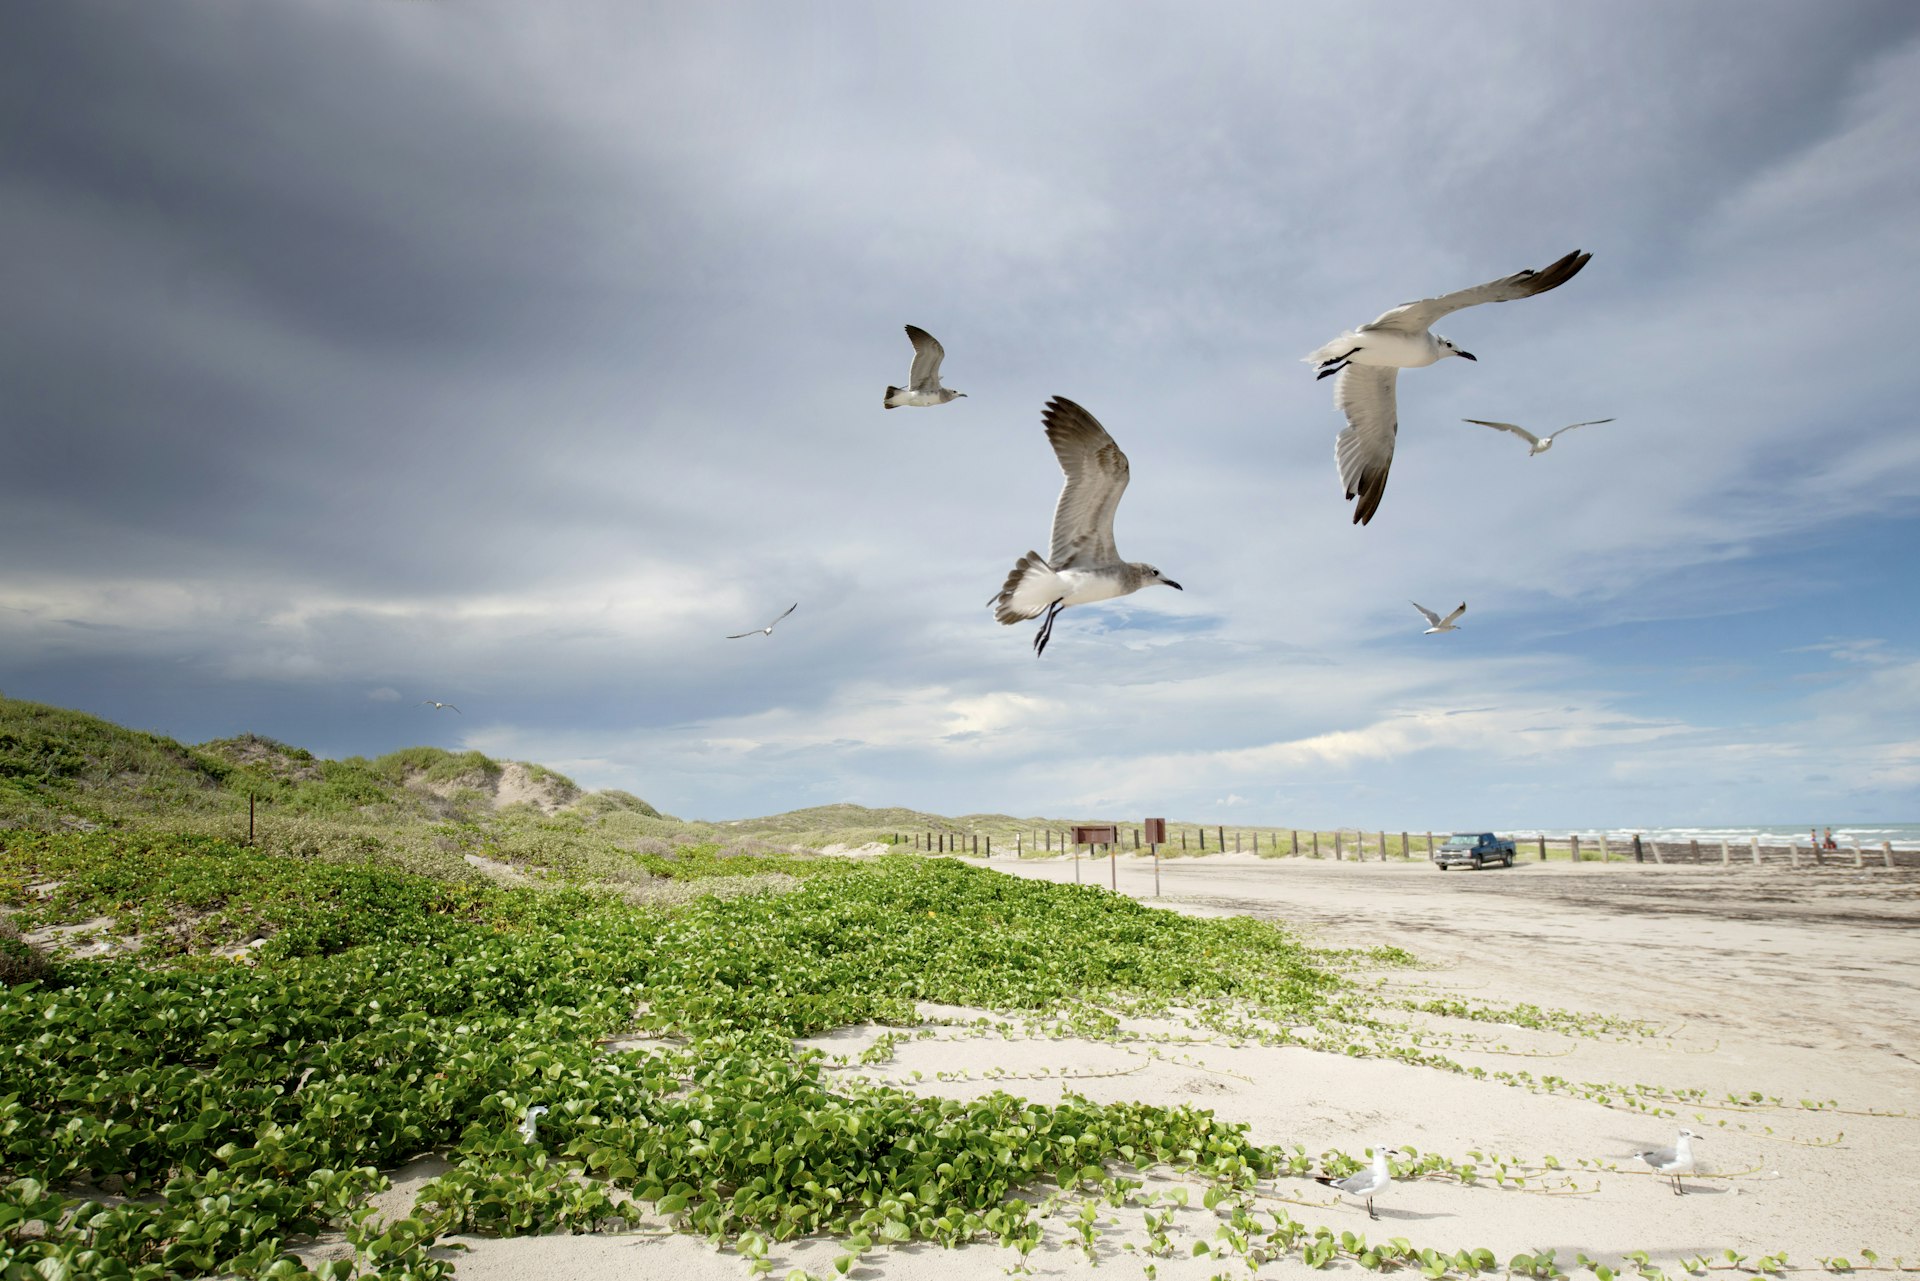 Seagulls in flight at North Padre Island, Texas.